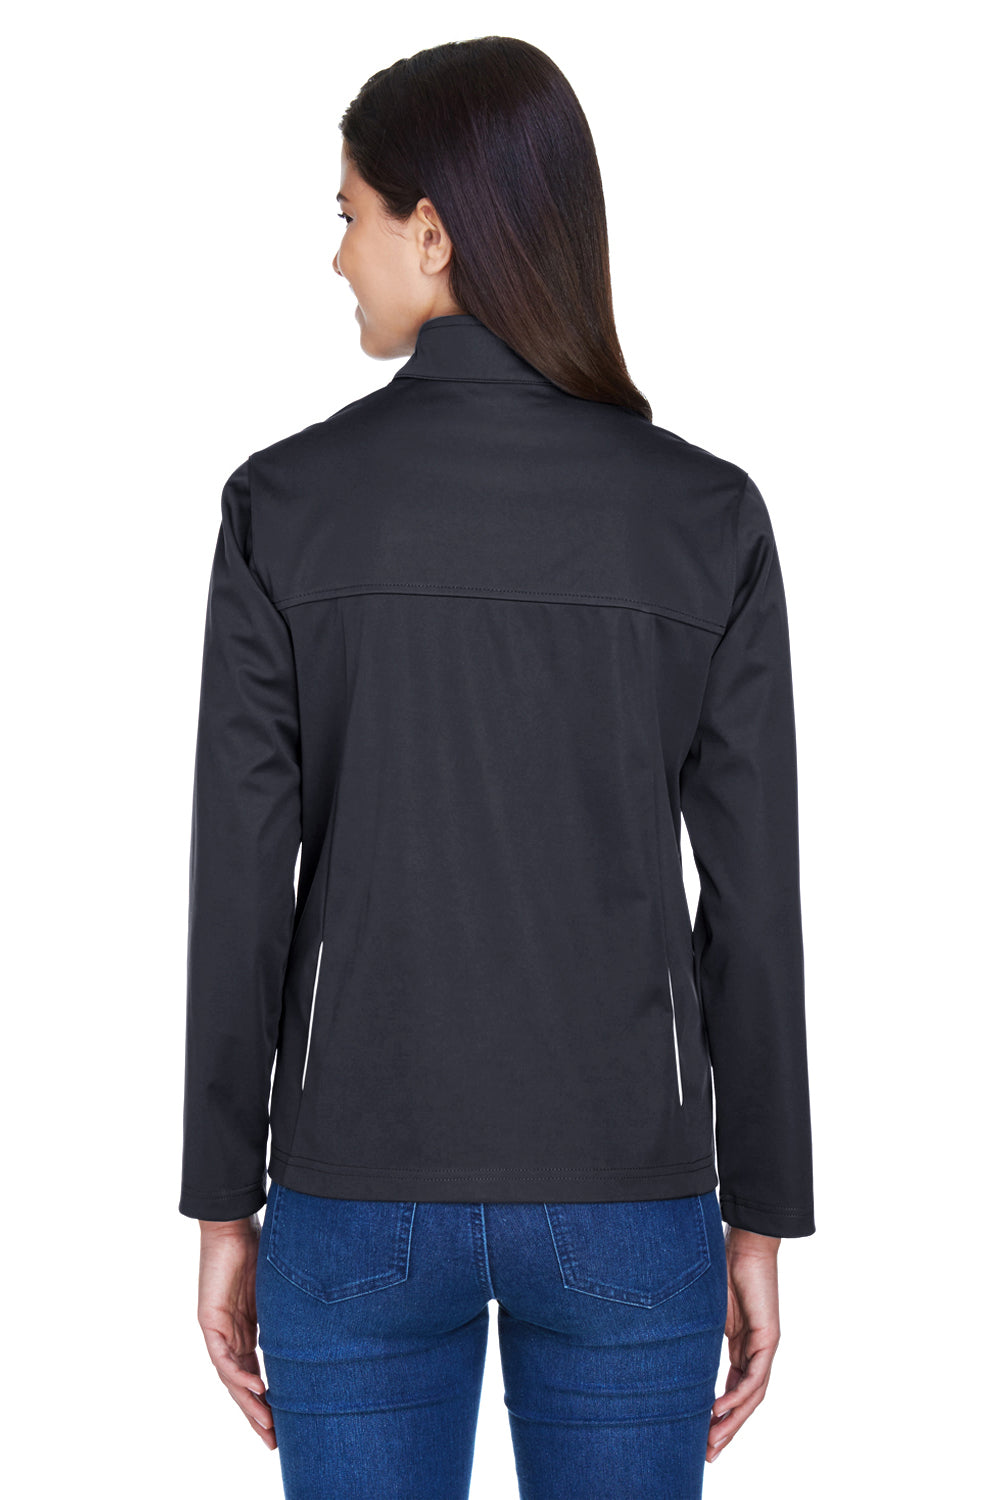 Core 365 CE708W Womens Techno Lite Water Resistant Full Zip Jacket Black Back